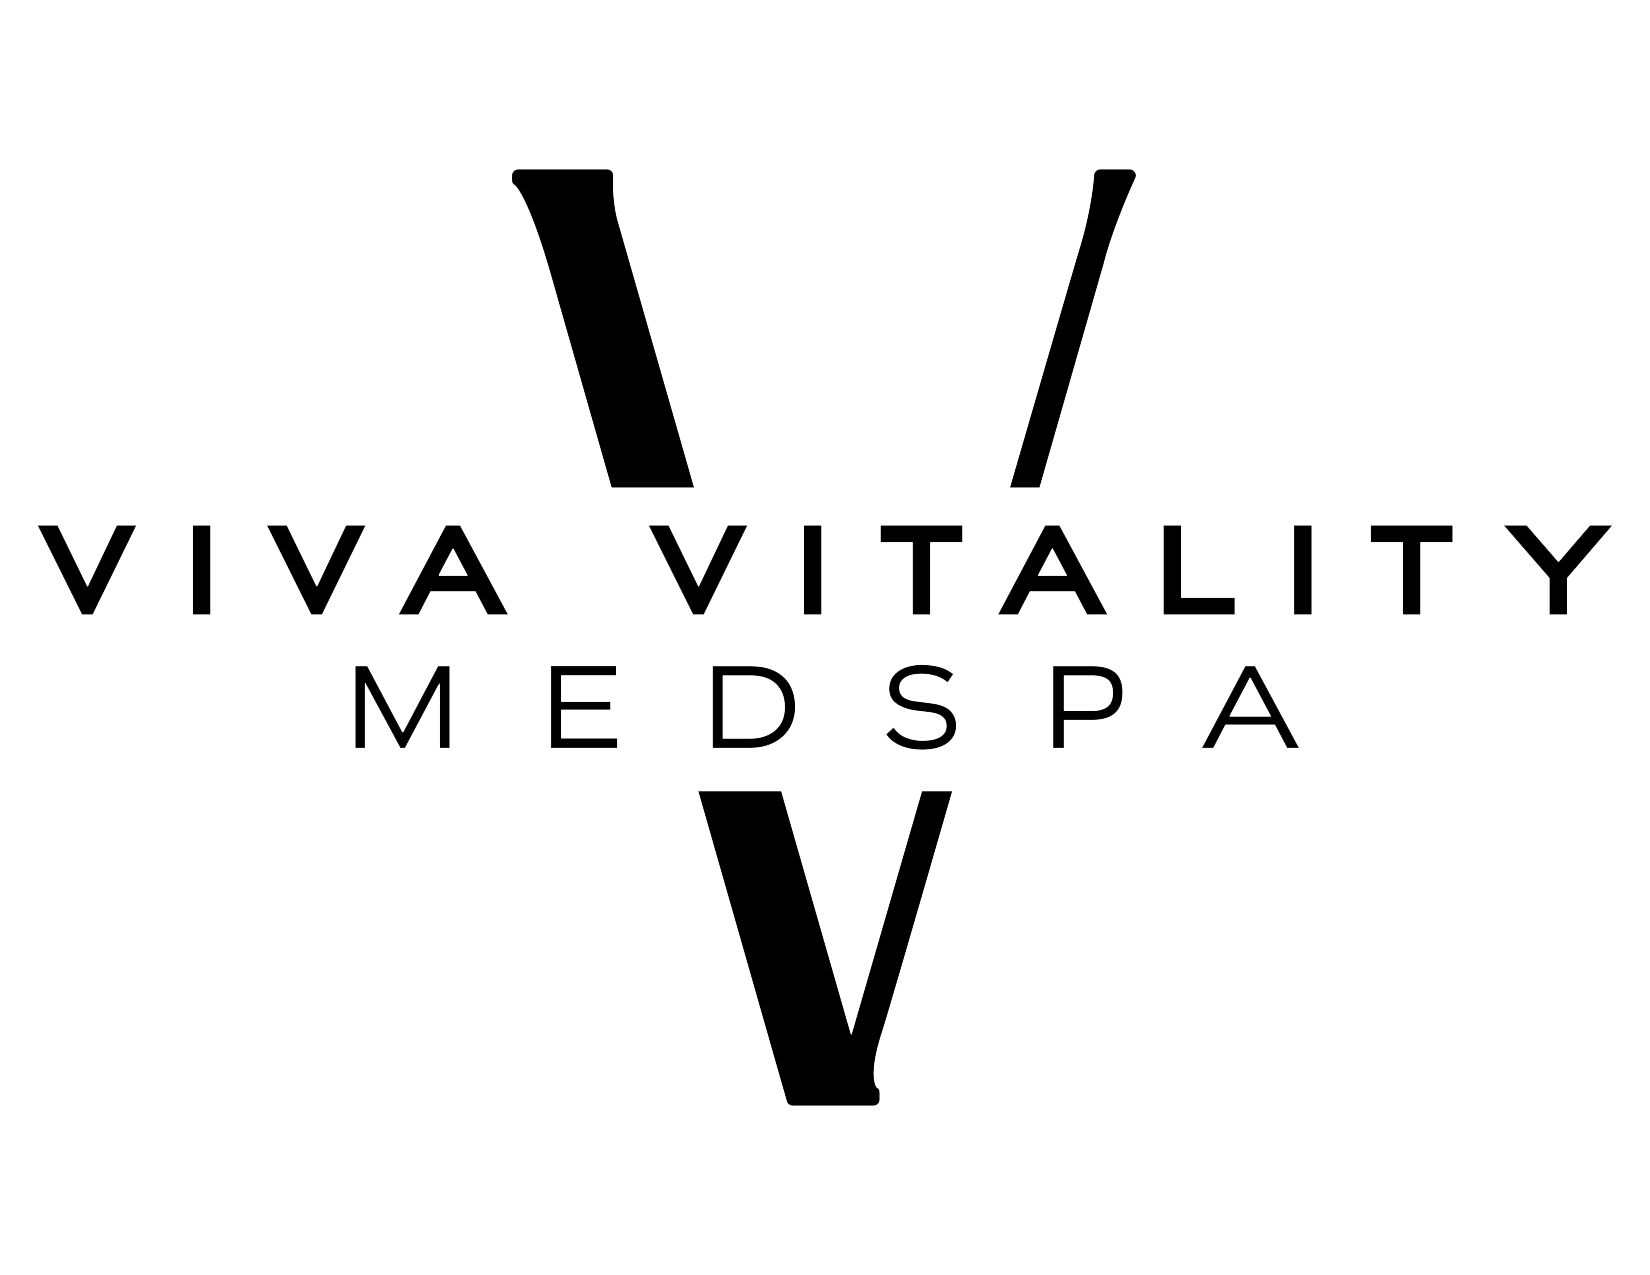 Viva-vitality mobile logo